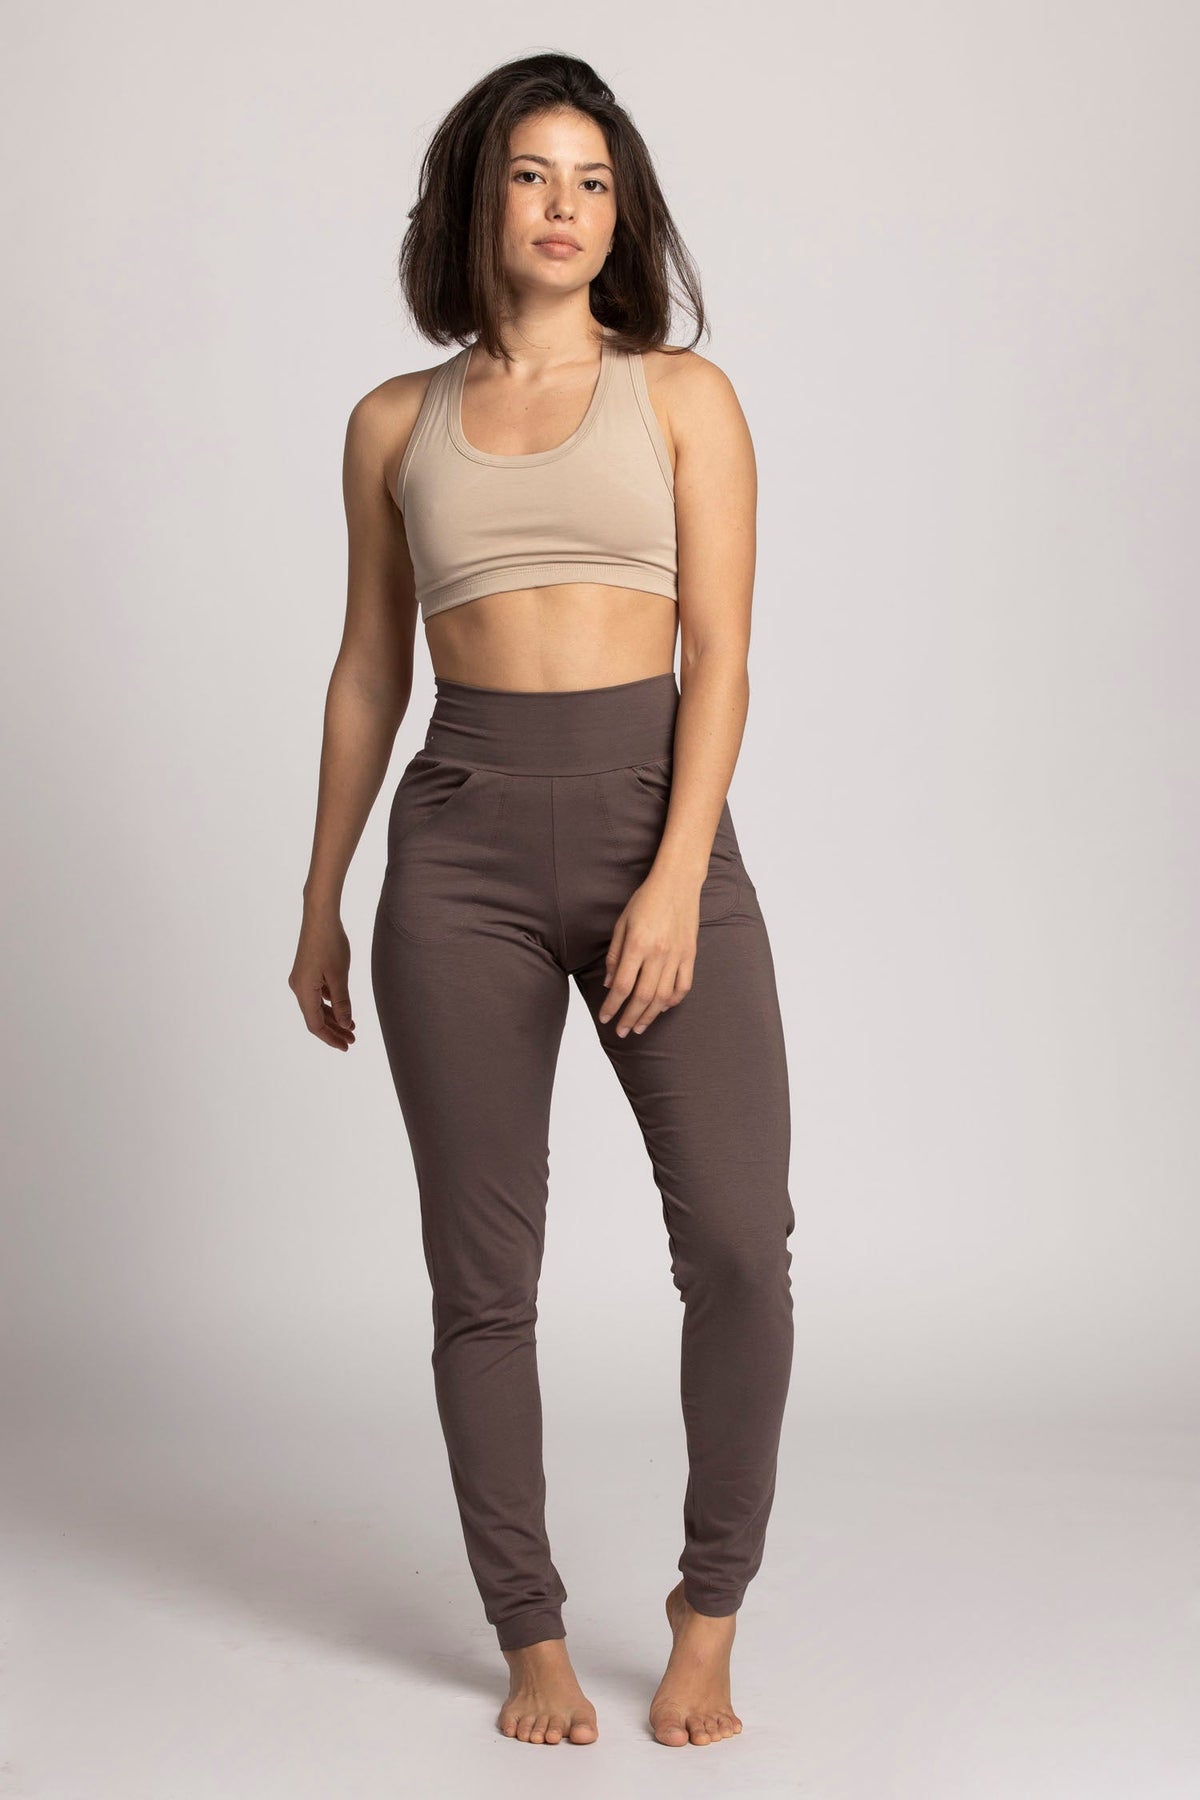 Pecan Slouchy Unisex Yoga Pants womens clothing Ripple Yoga Wear Slouchy Unisex Yoga Pants